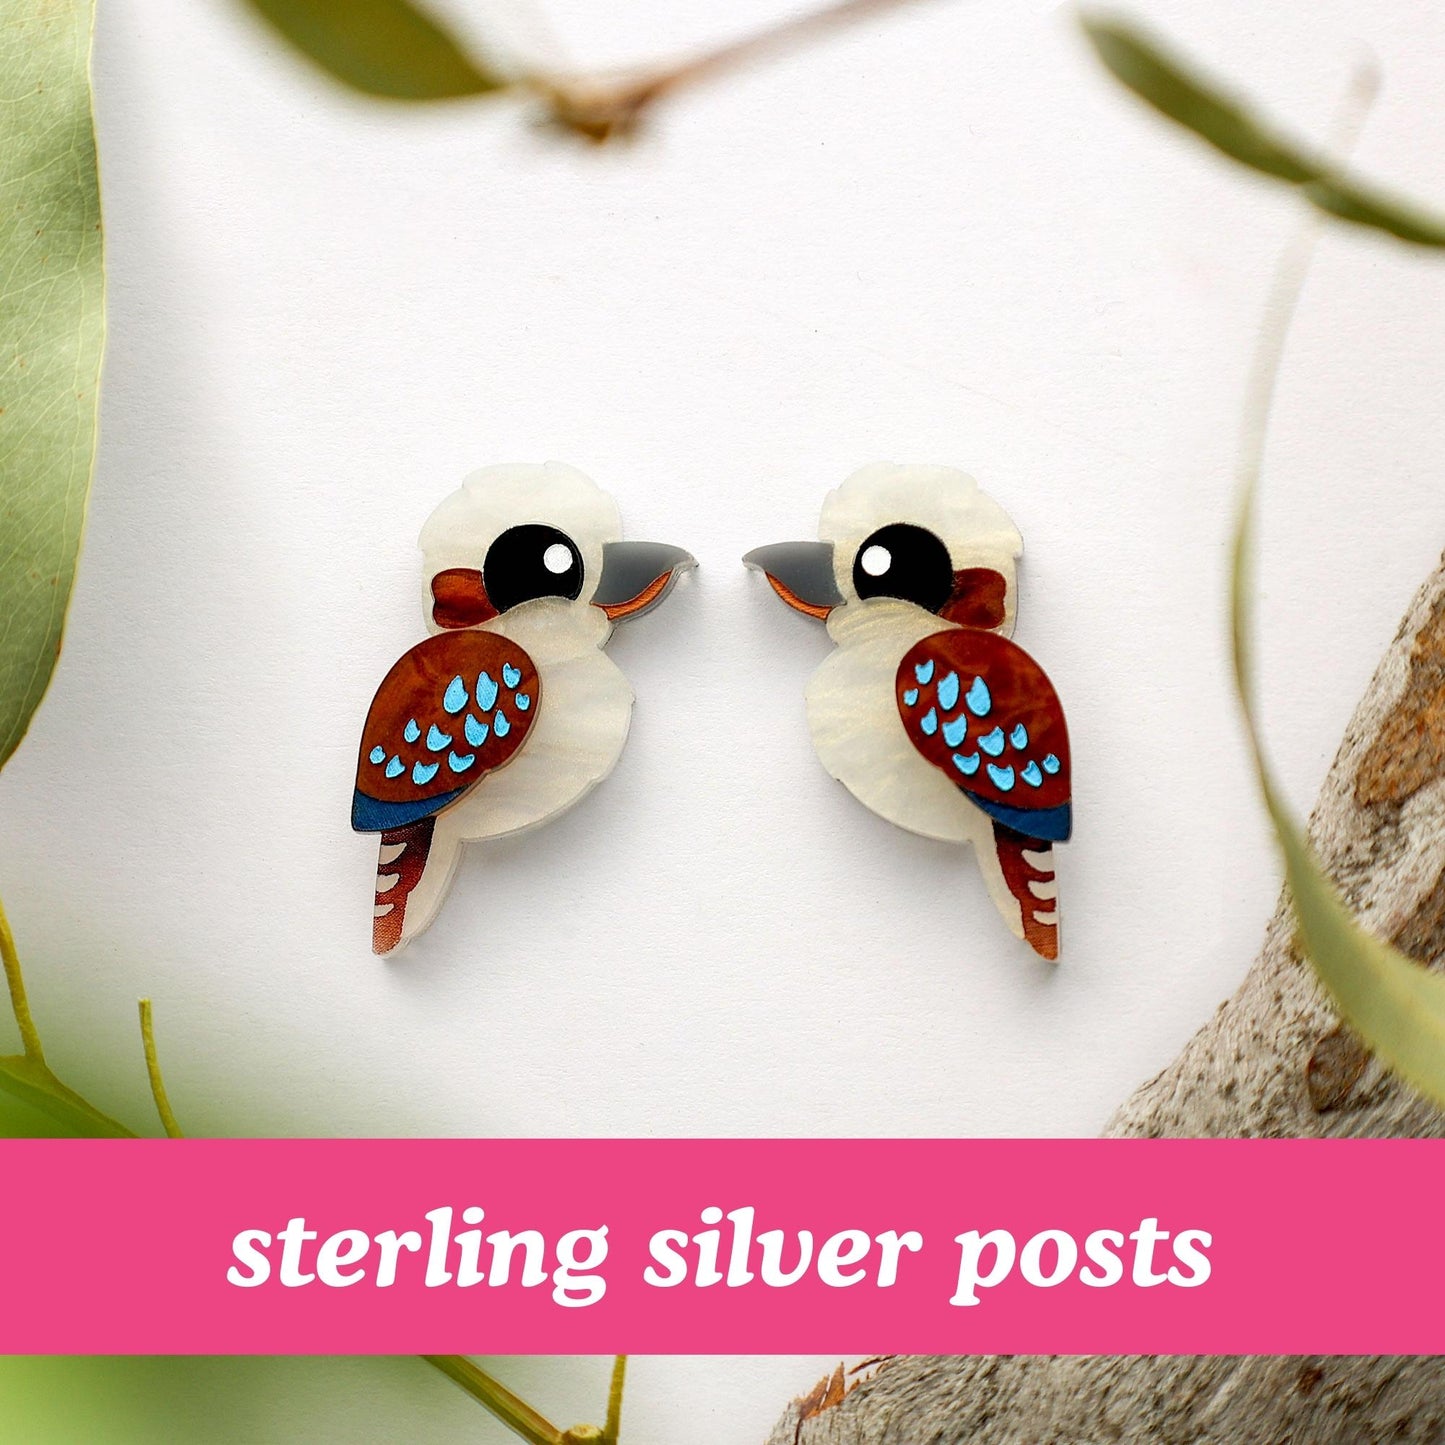 Kookaburra Studs - Statement Bird Earrings